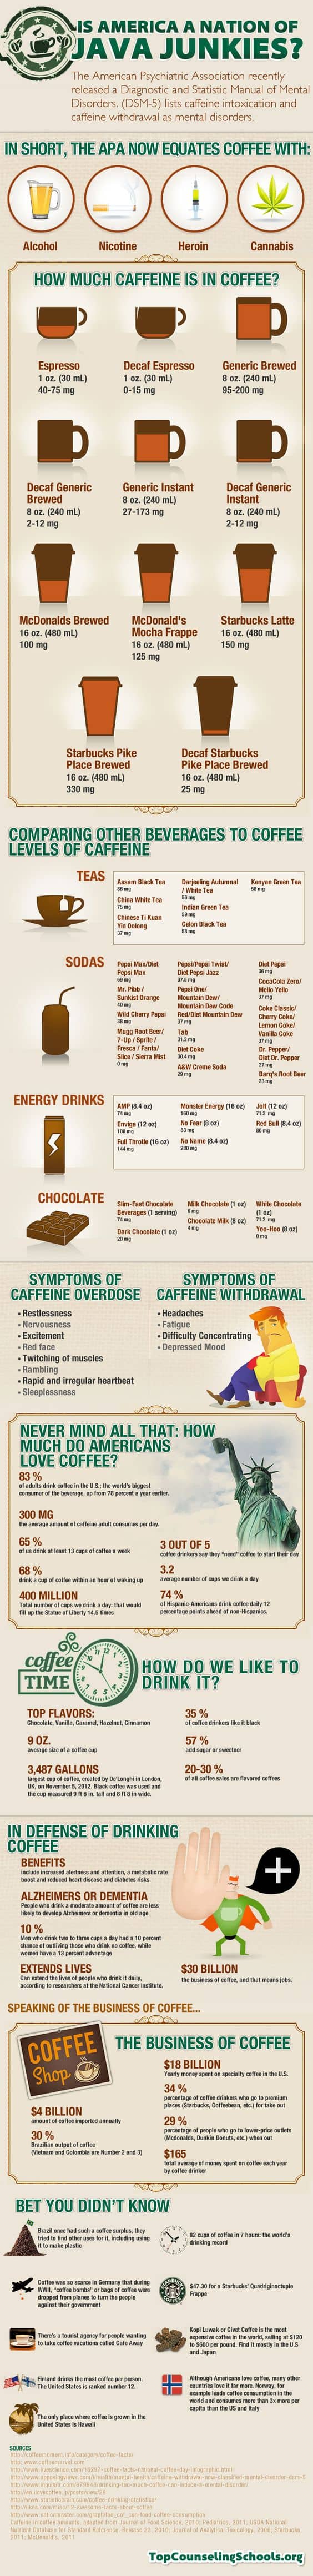 Infographic: brief details on caffeine withdrawals